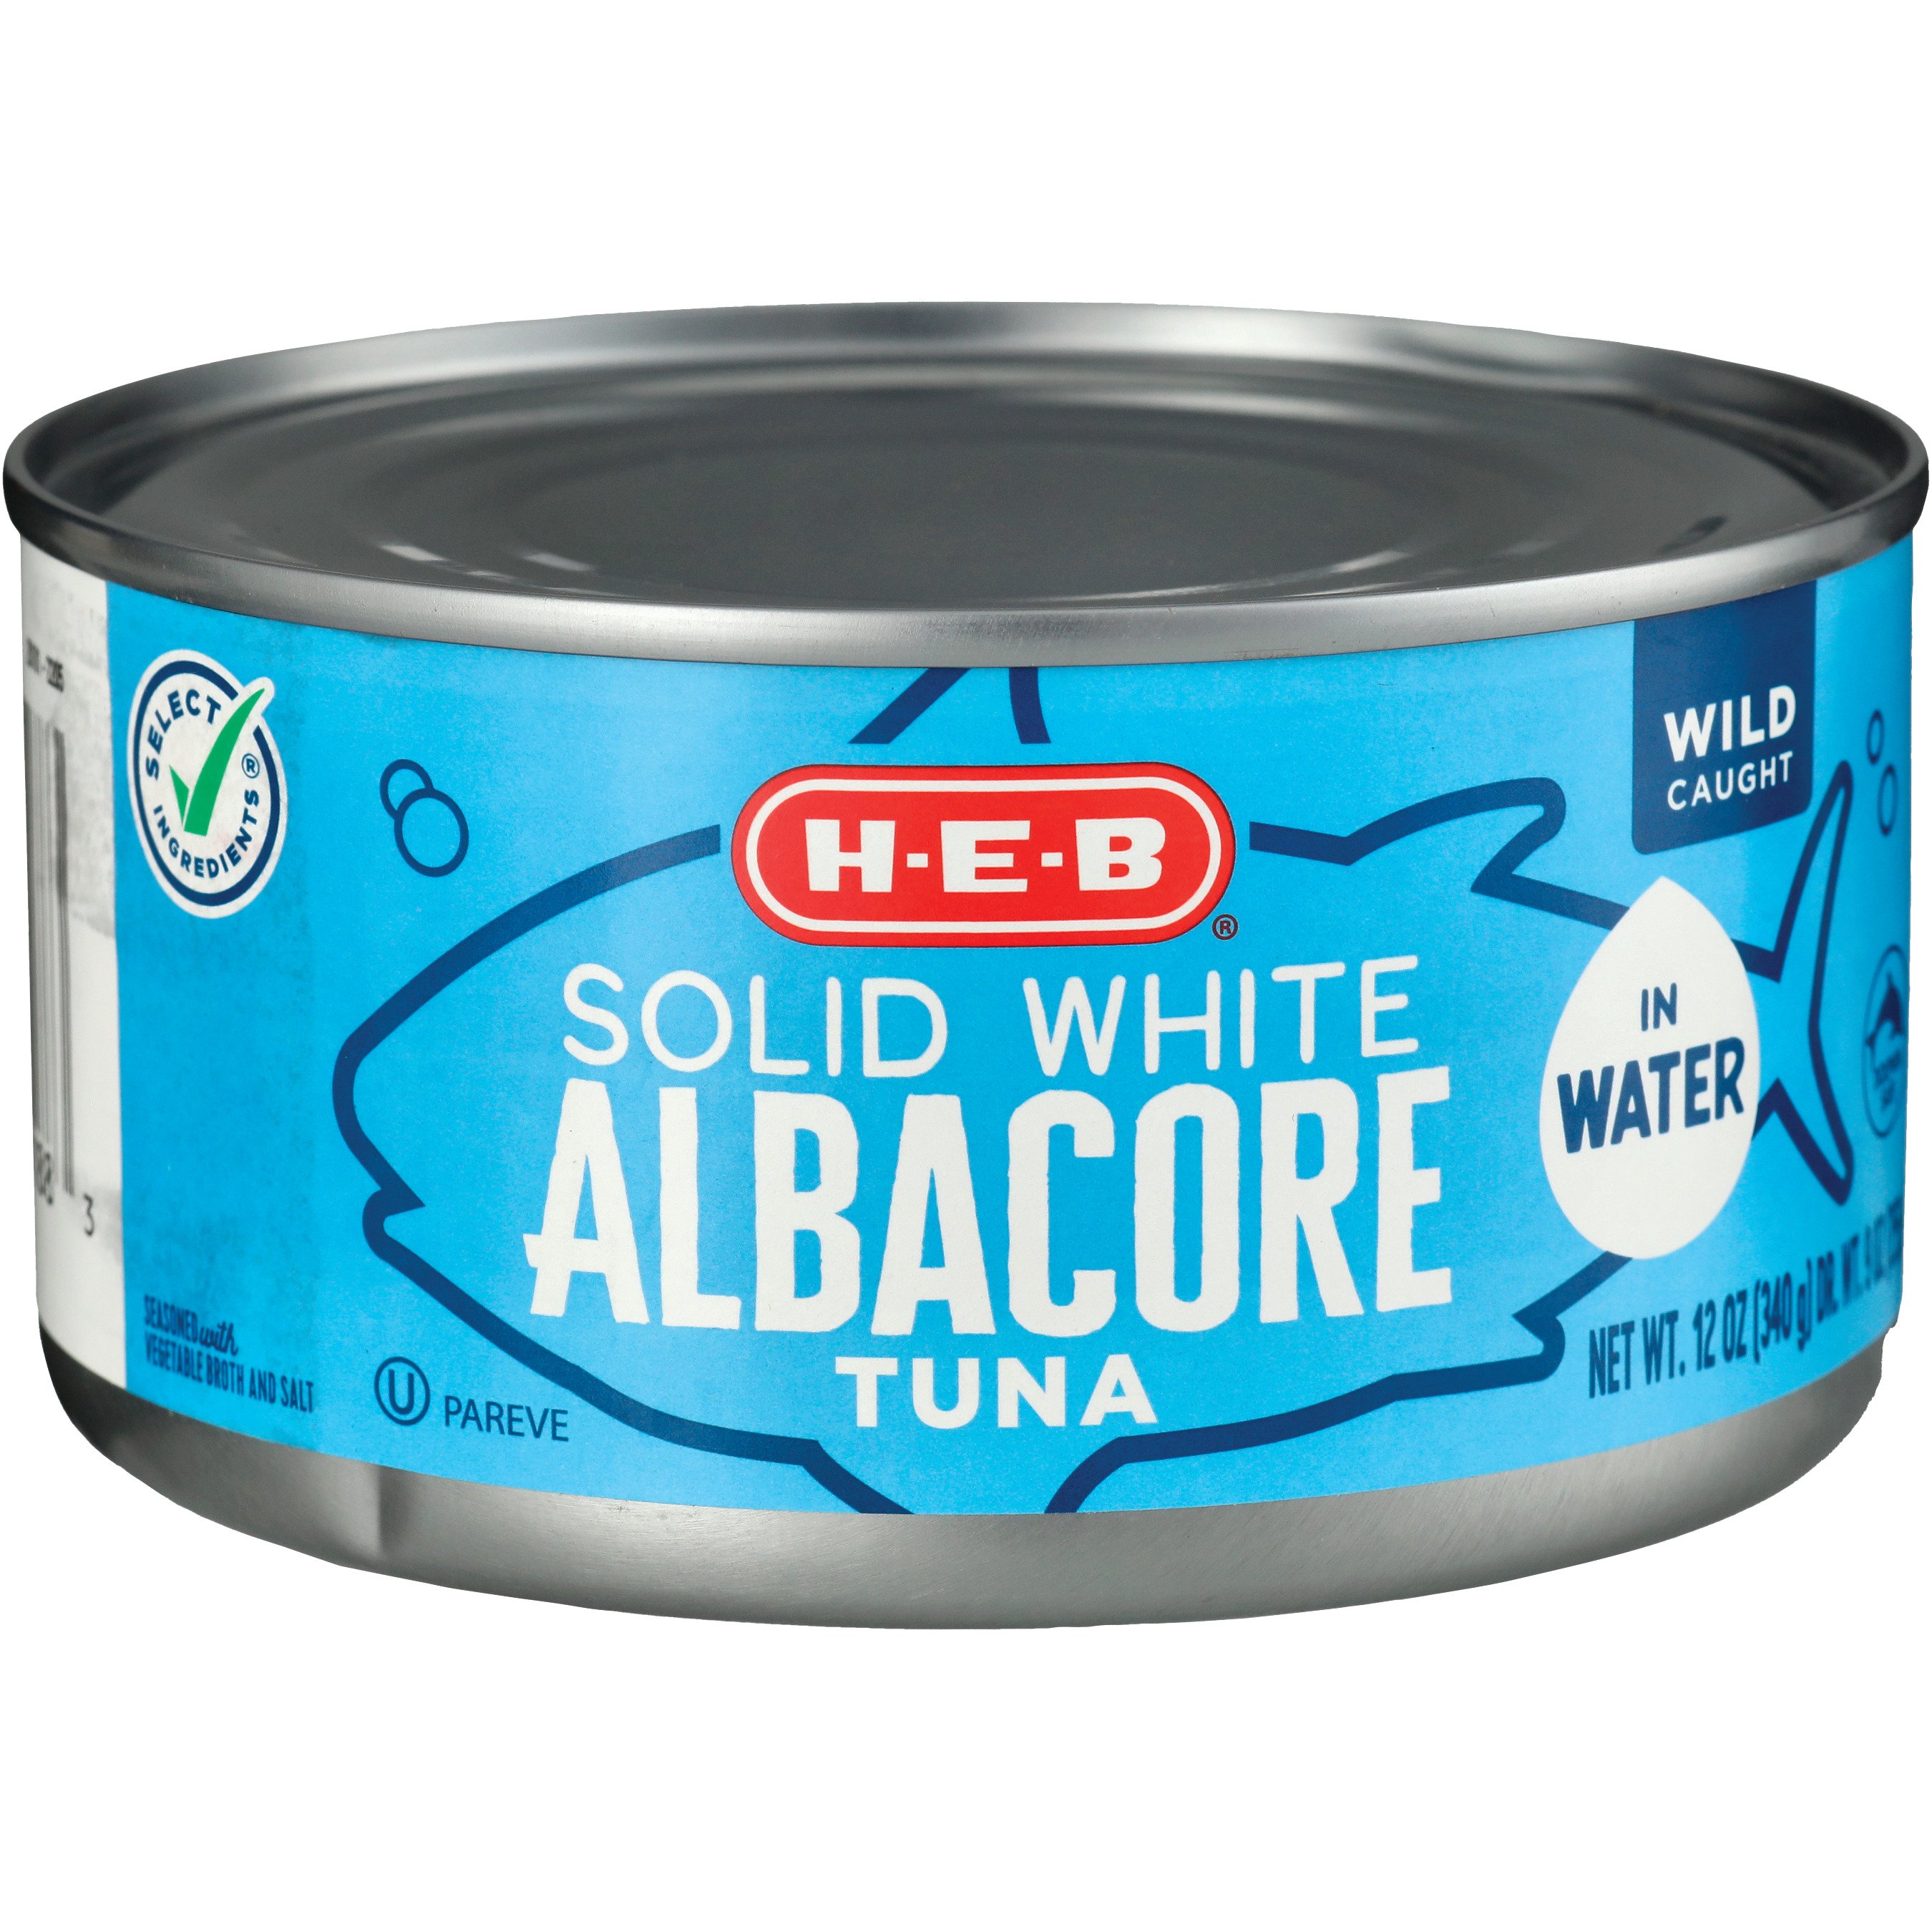 H-E-B Solid White Albacore Tuna in Water - Shop Seafood at H-E-B